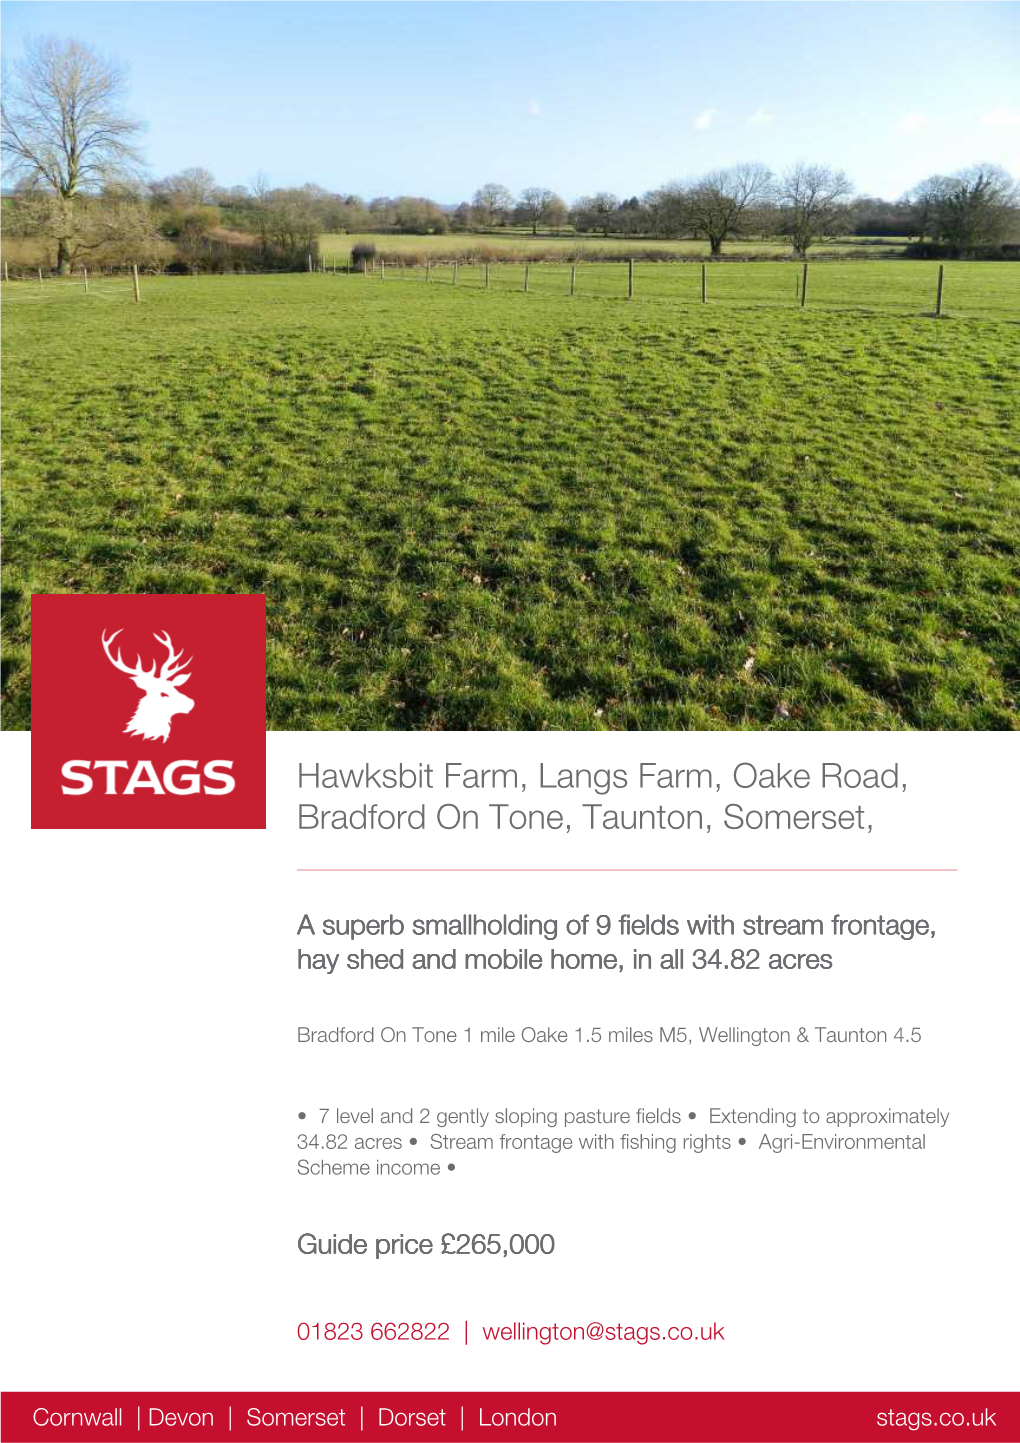 Hawksbit Farm, Langs Farm, Oake Road, Bradford on Tone, Taunton, Somerset